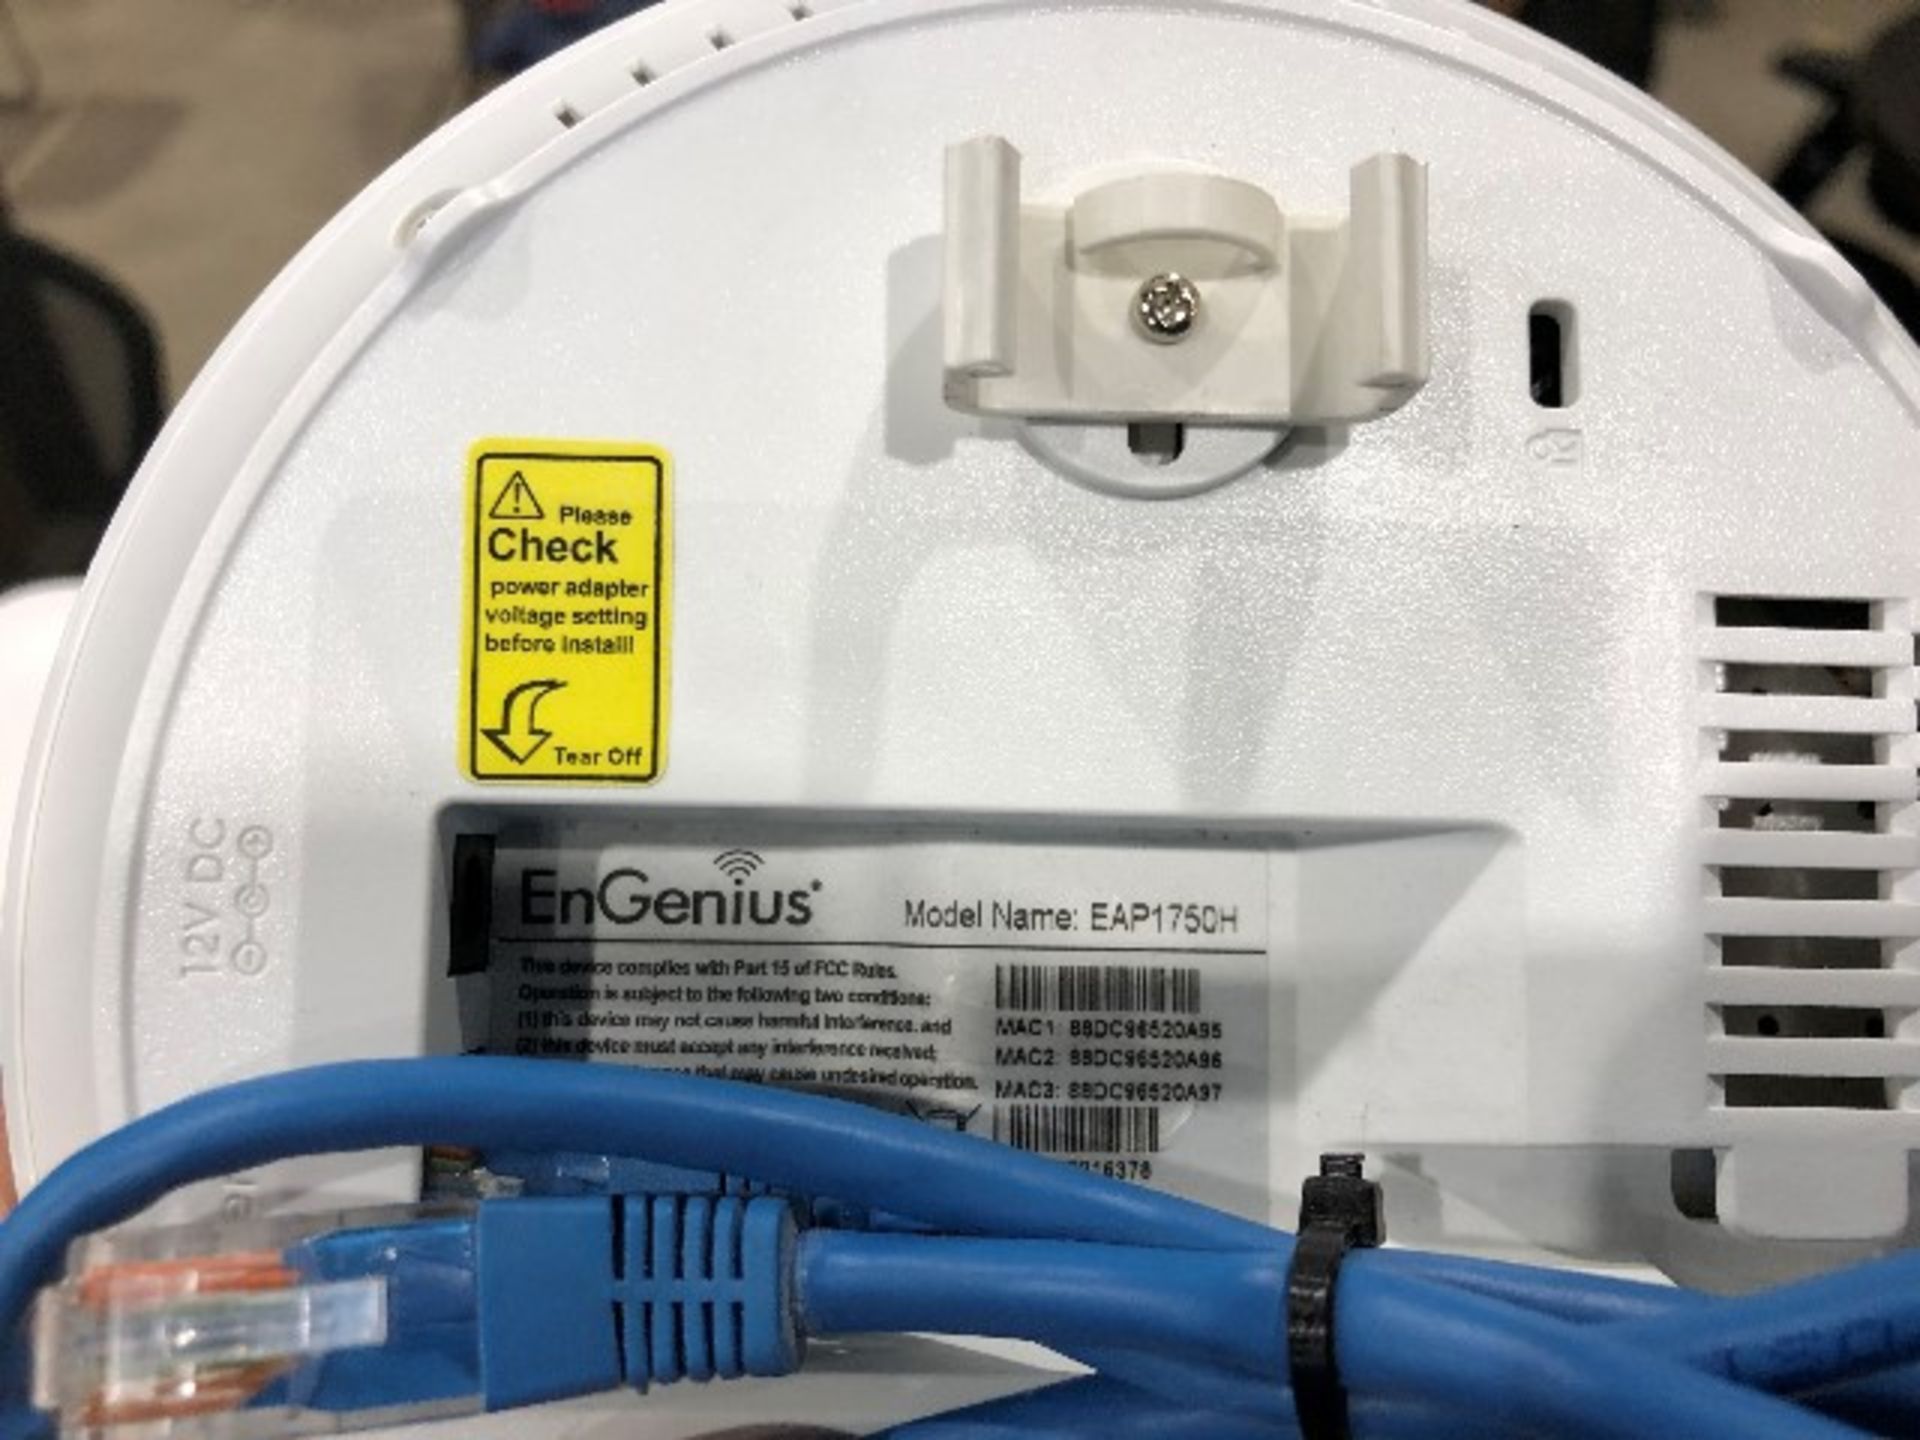 EnGenius assorted wi-fi extenders, 4pcs (Lot) - Bild 3 aus 4